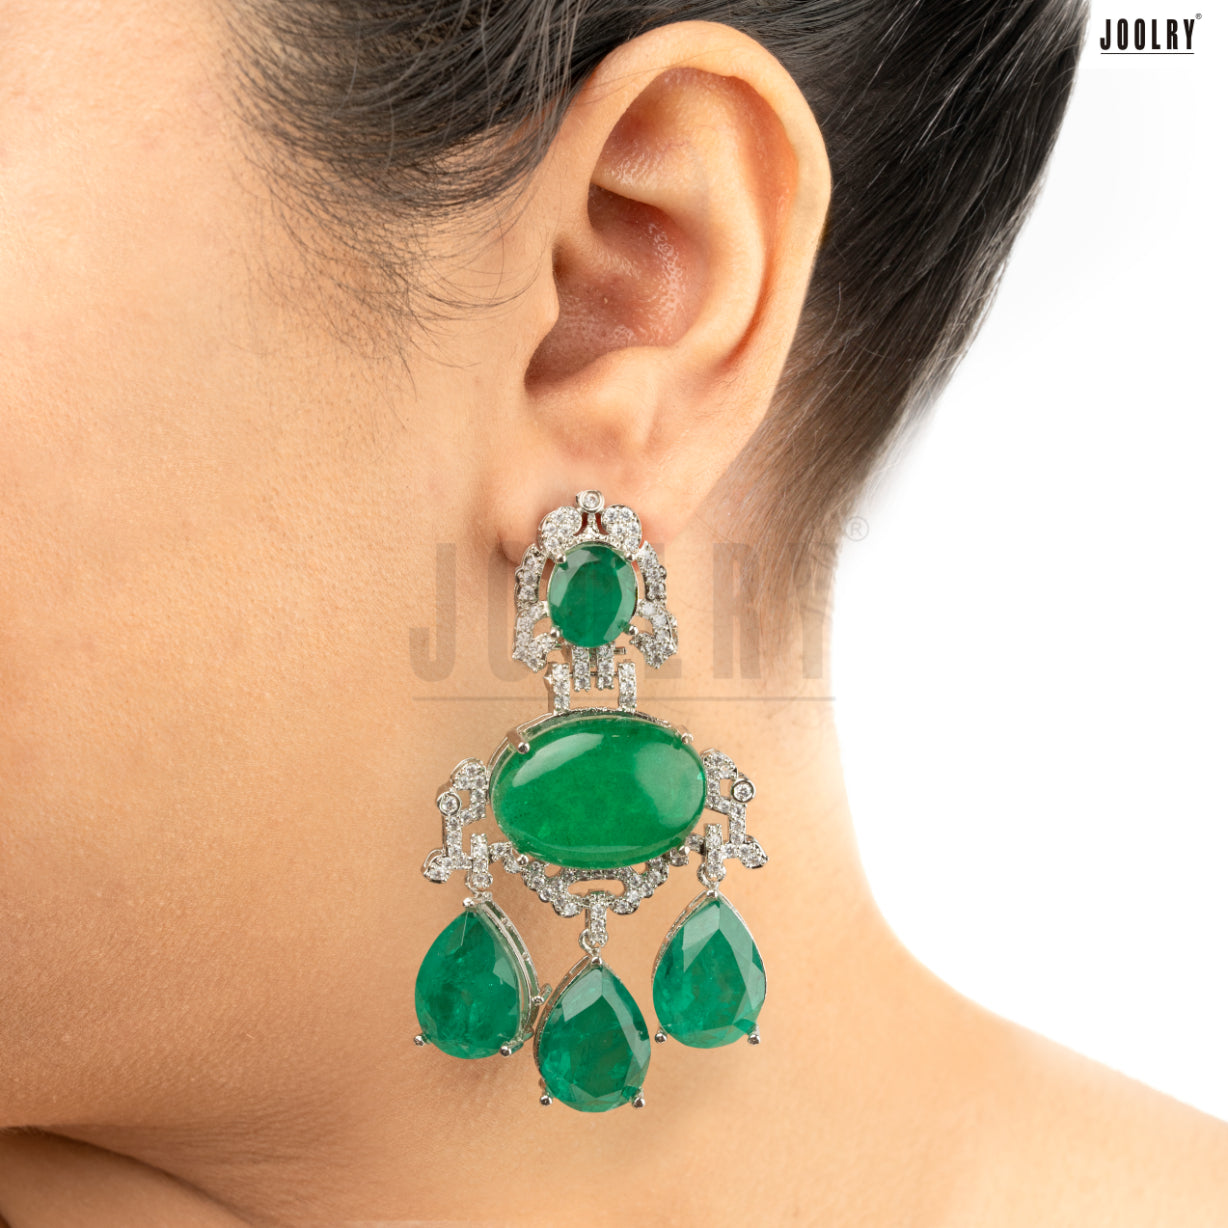 The green joyeria necklace set